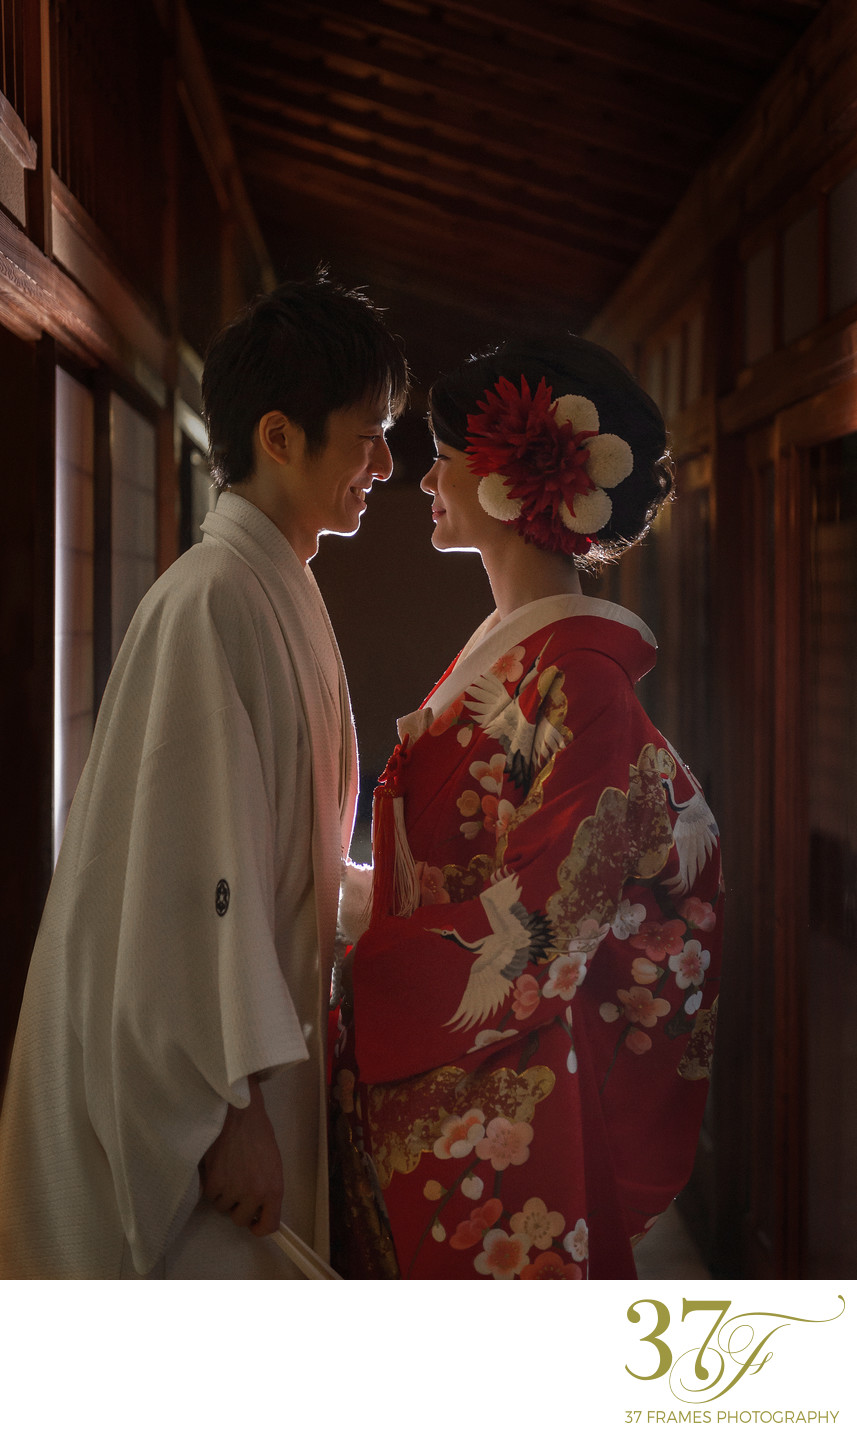 Beautiful Japanese formal wedding kimono